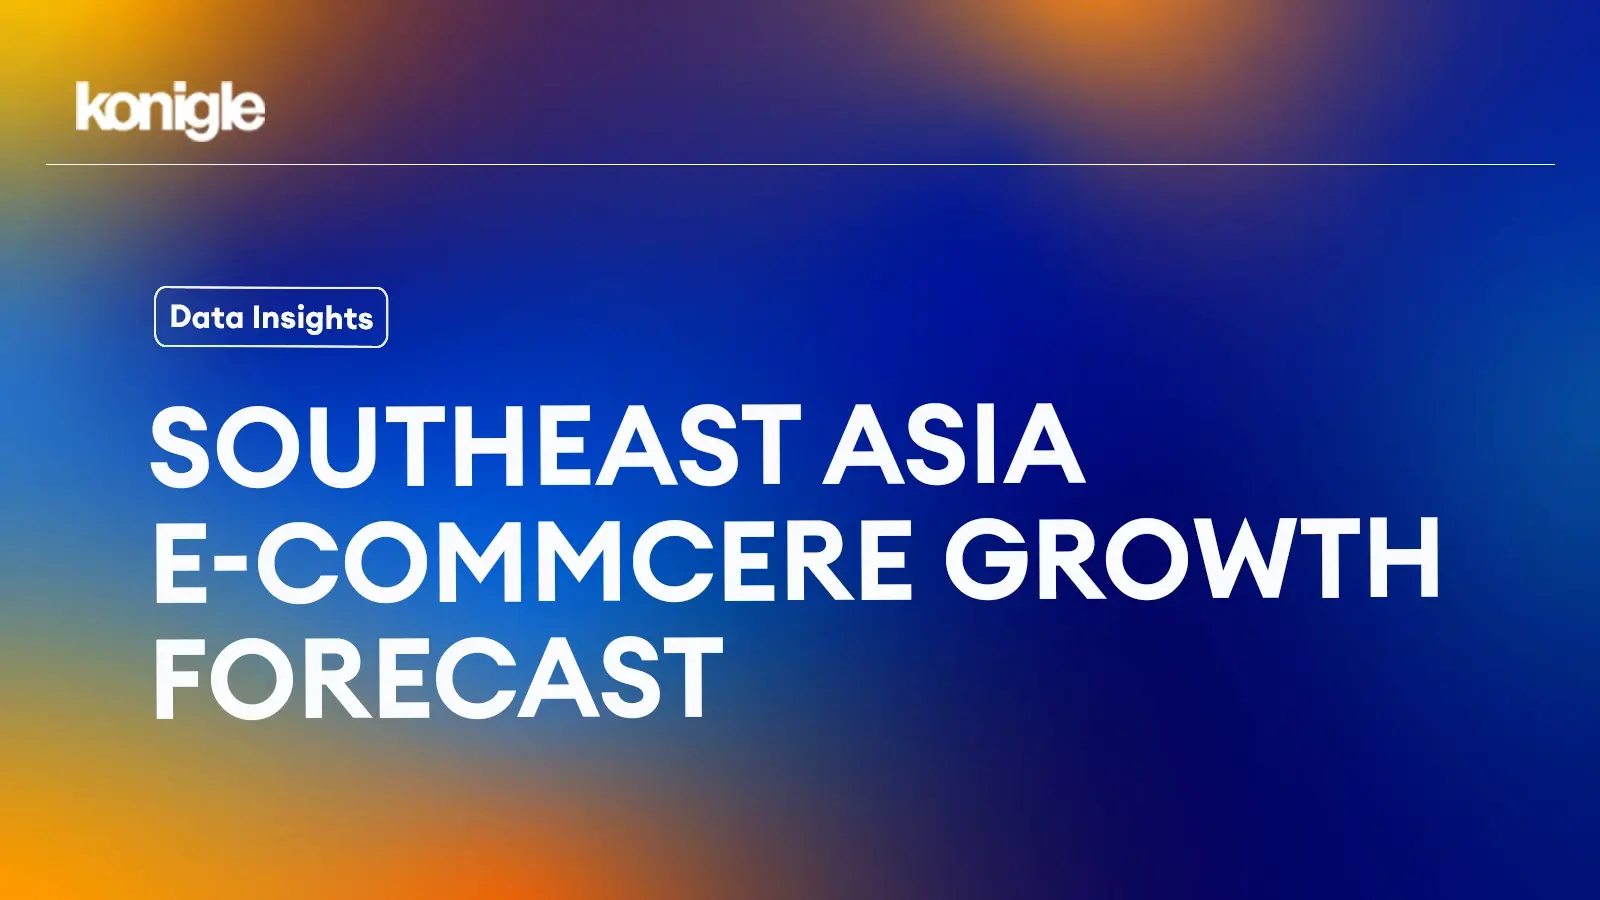 Southeast Asia E-commerce Growth Forecast